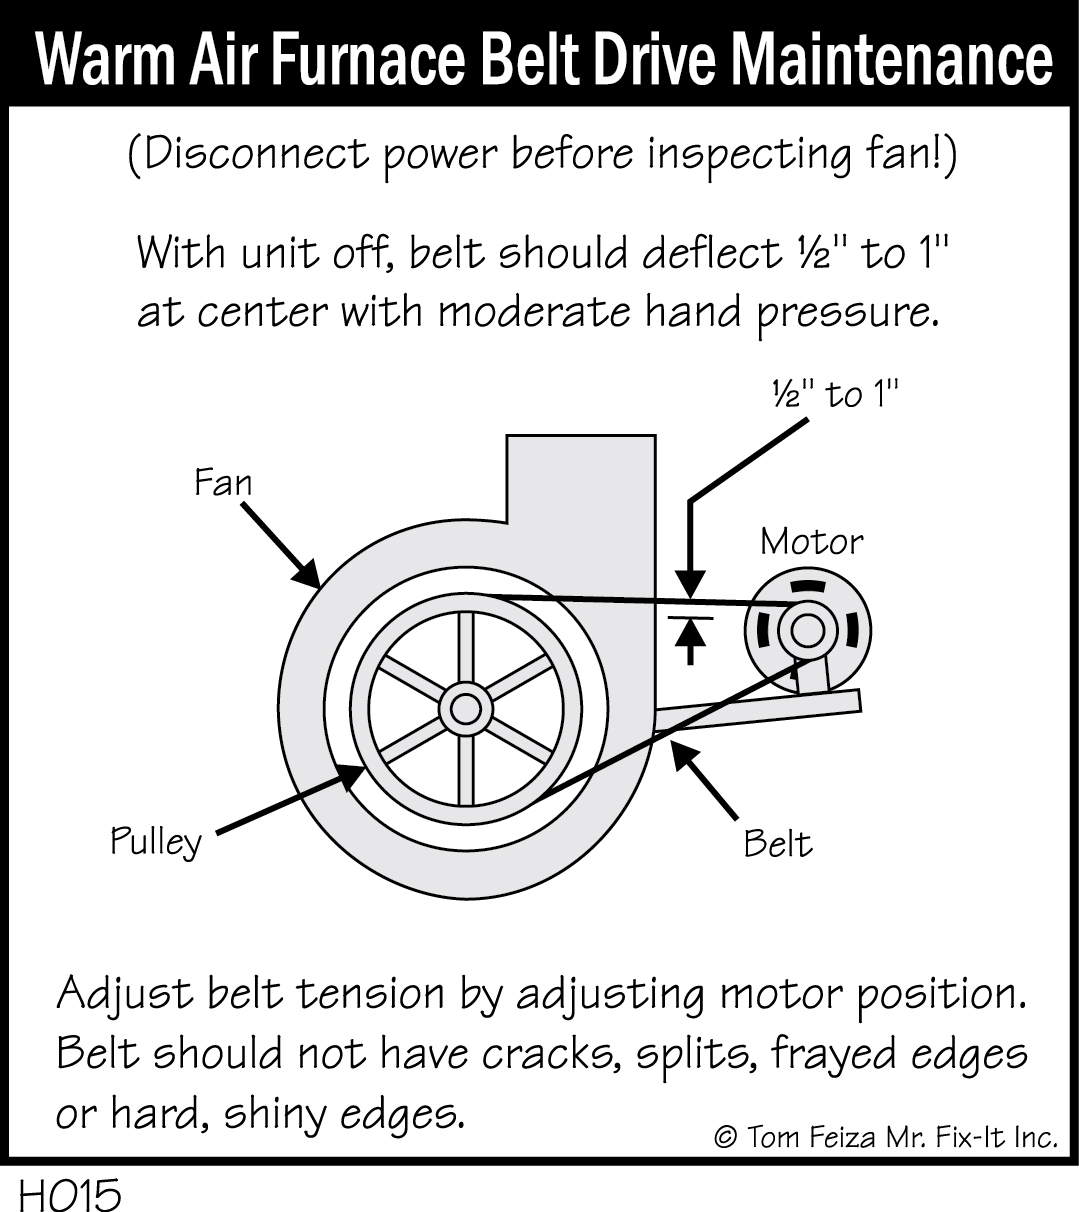 H015 - Warm Air Furnace Belt Drive Maintenance